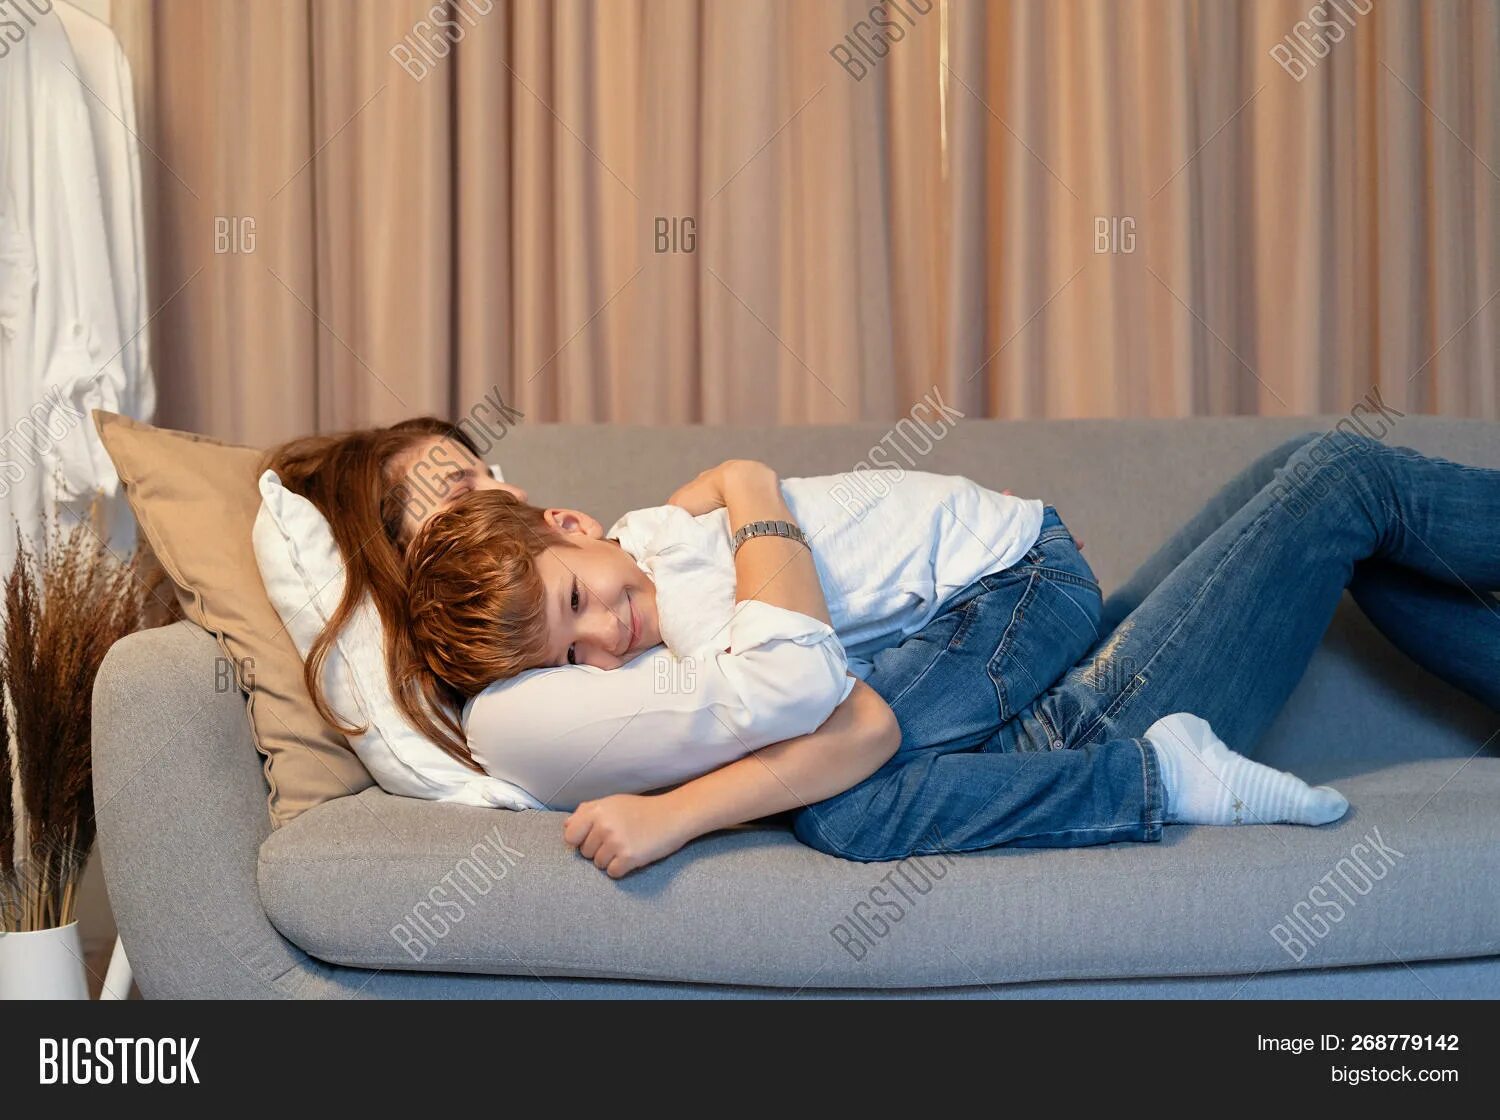 Мамаши лежа. Фотосессия на диване с сыном и мама. Мама с ребенком на диване. Мать обнимает сына на диване. Мать сидит с сыном на диване.